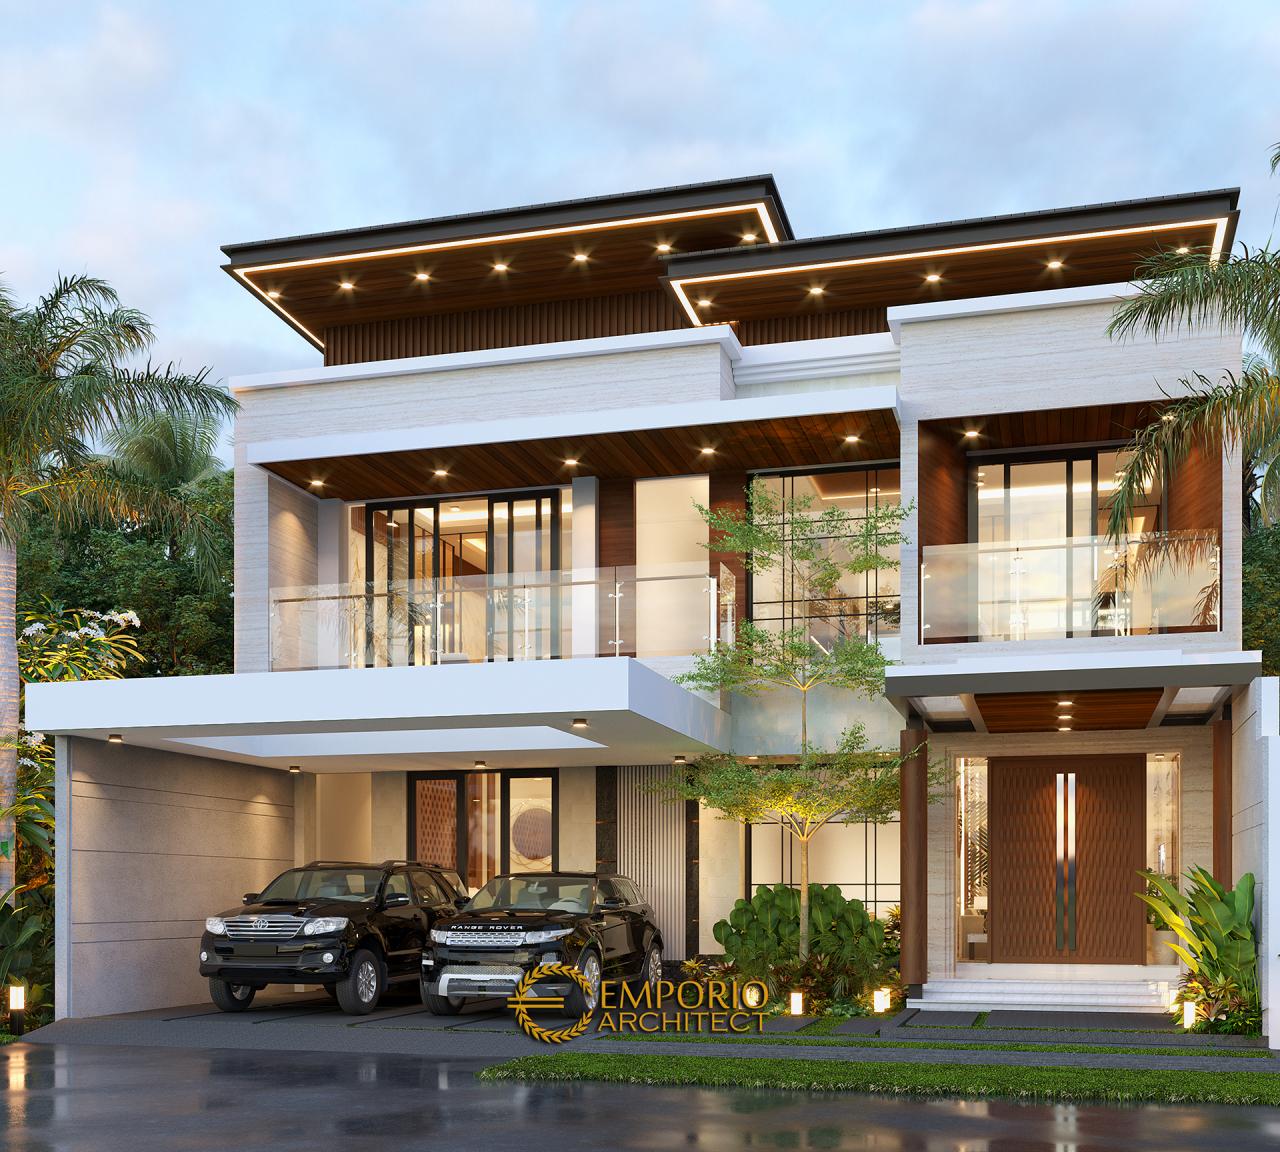 Desain Rumah Modern 2 Lantai Bapak Imam - Bandung, Jawa Barat